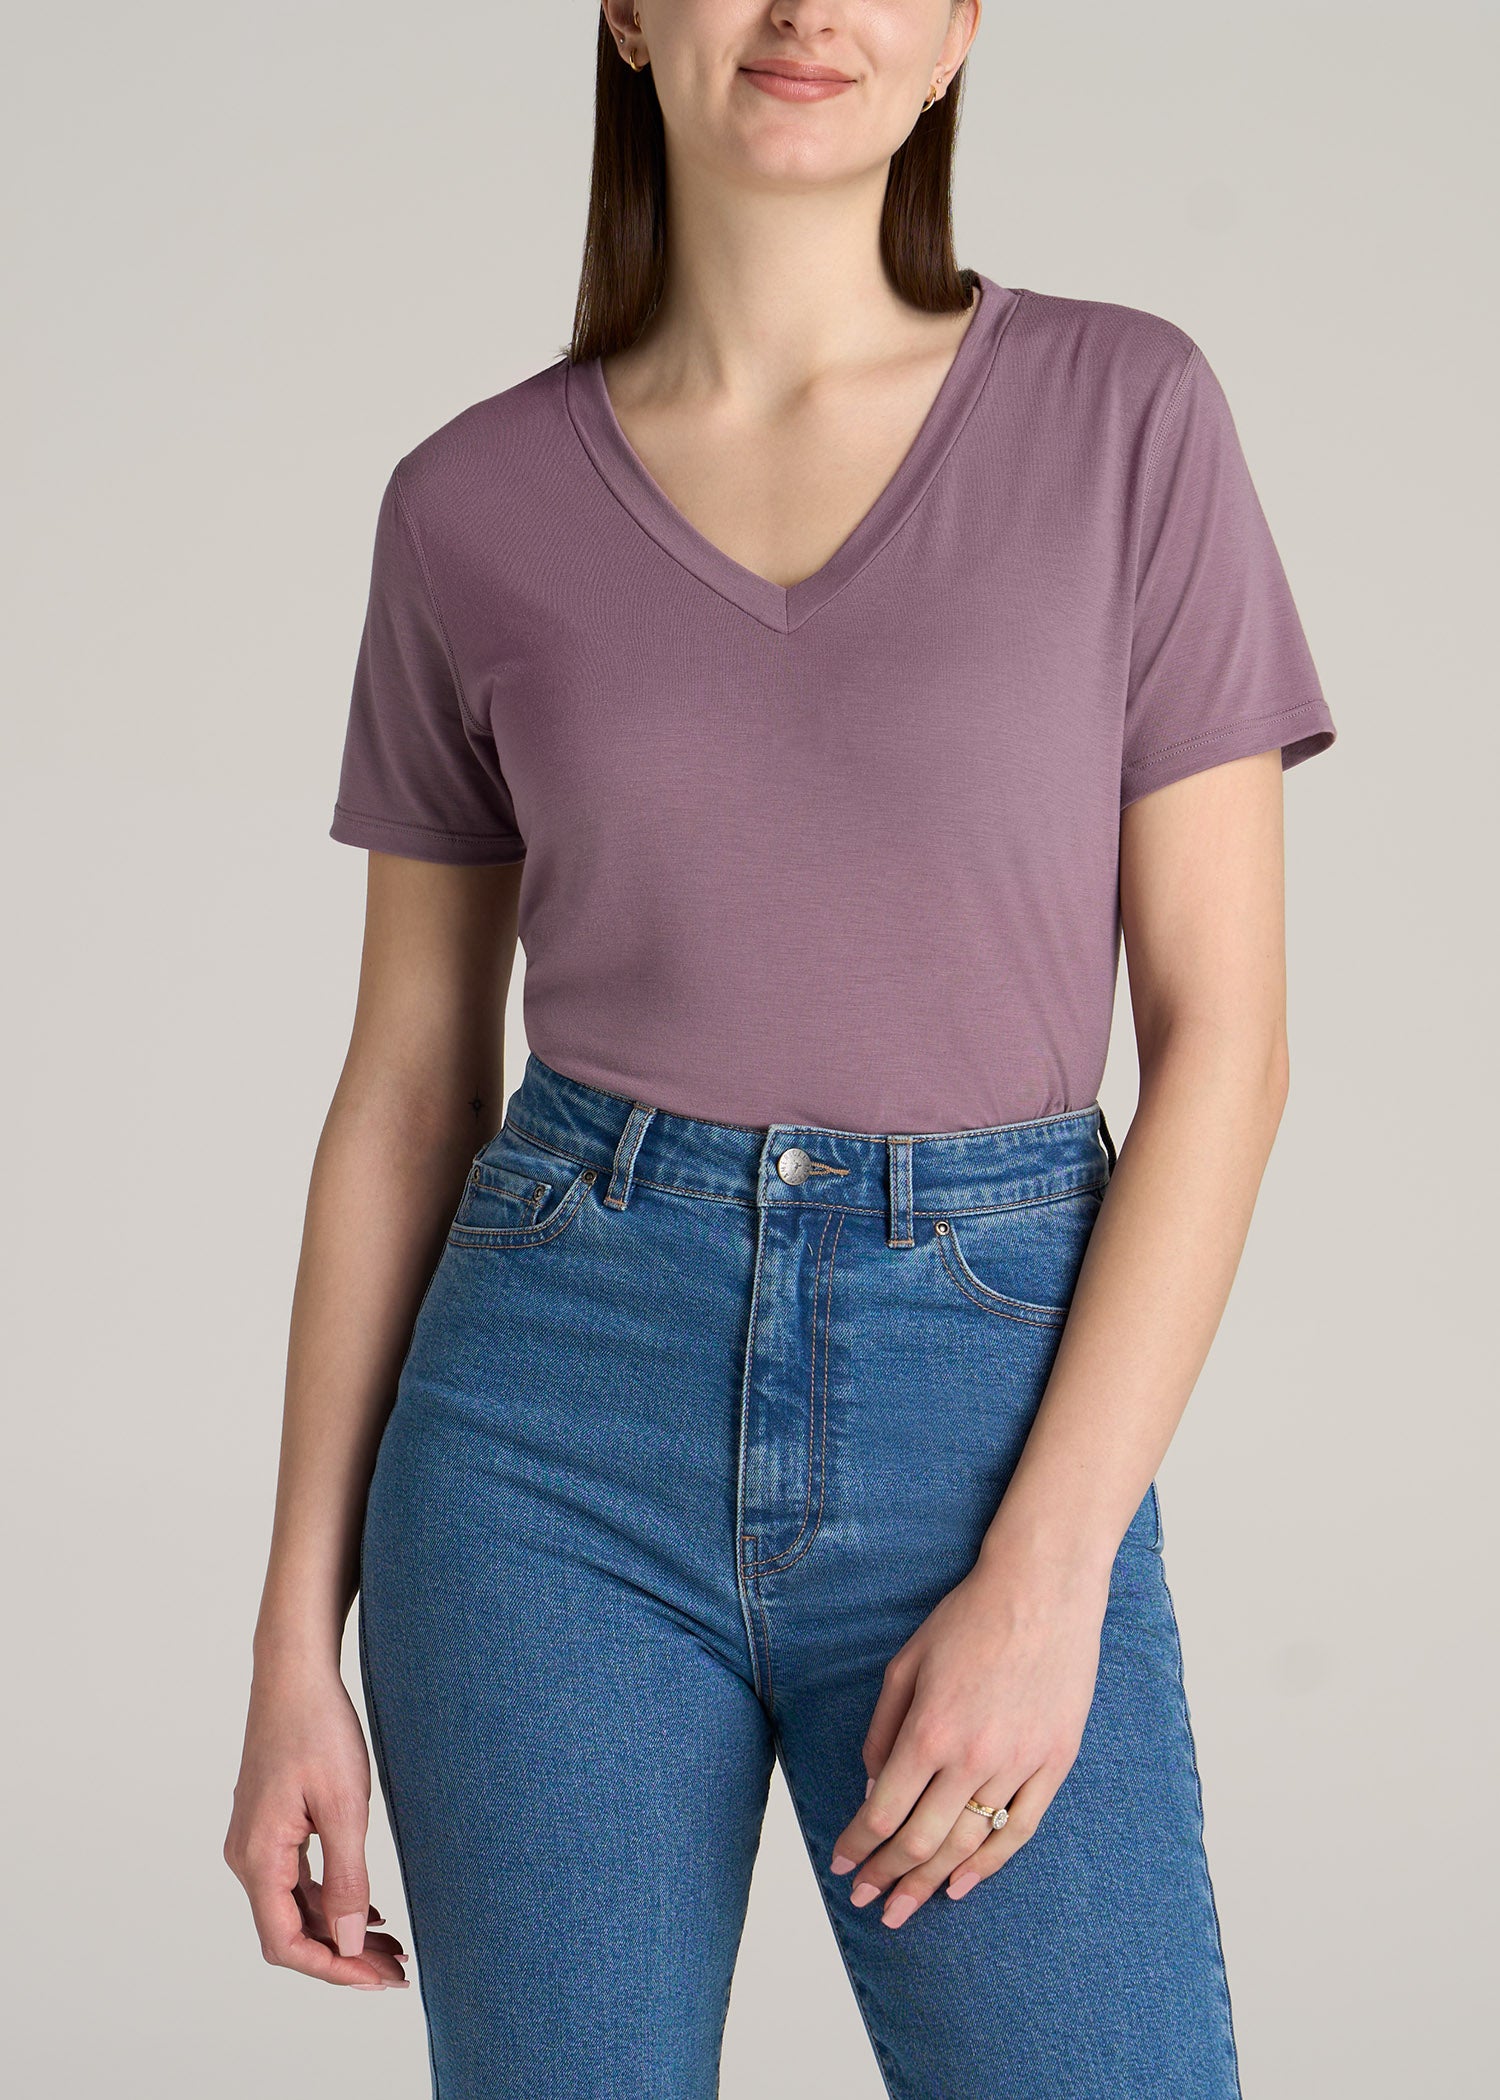 Lucky Brand Short Sleeve Henley Tee - Women's Clothing Tops Shirts